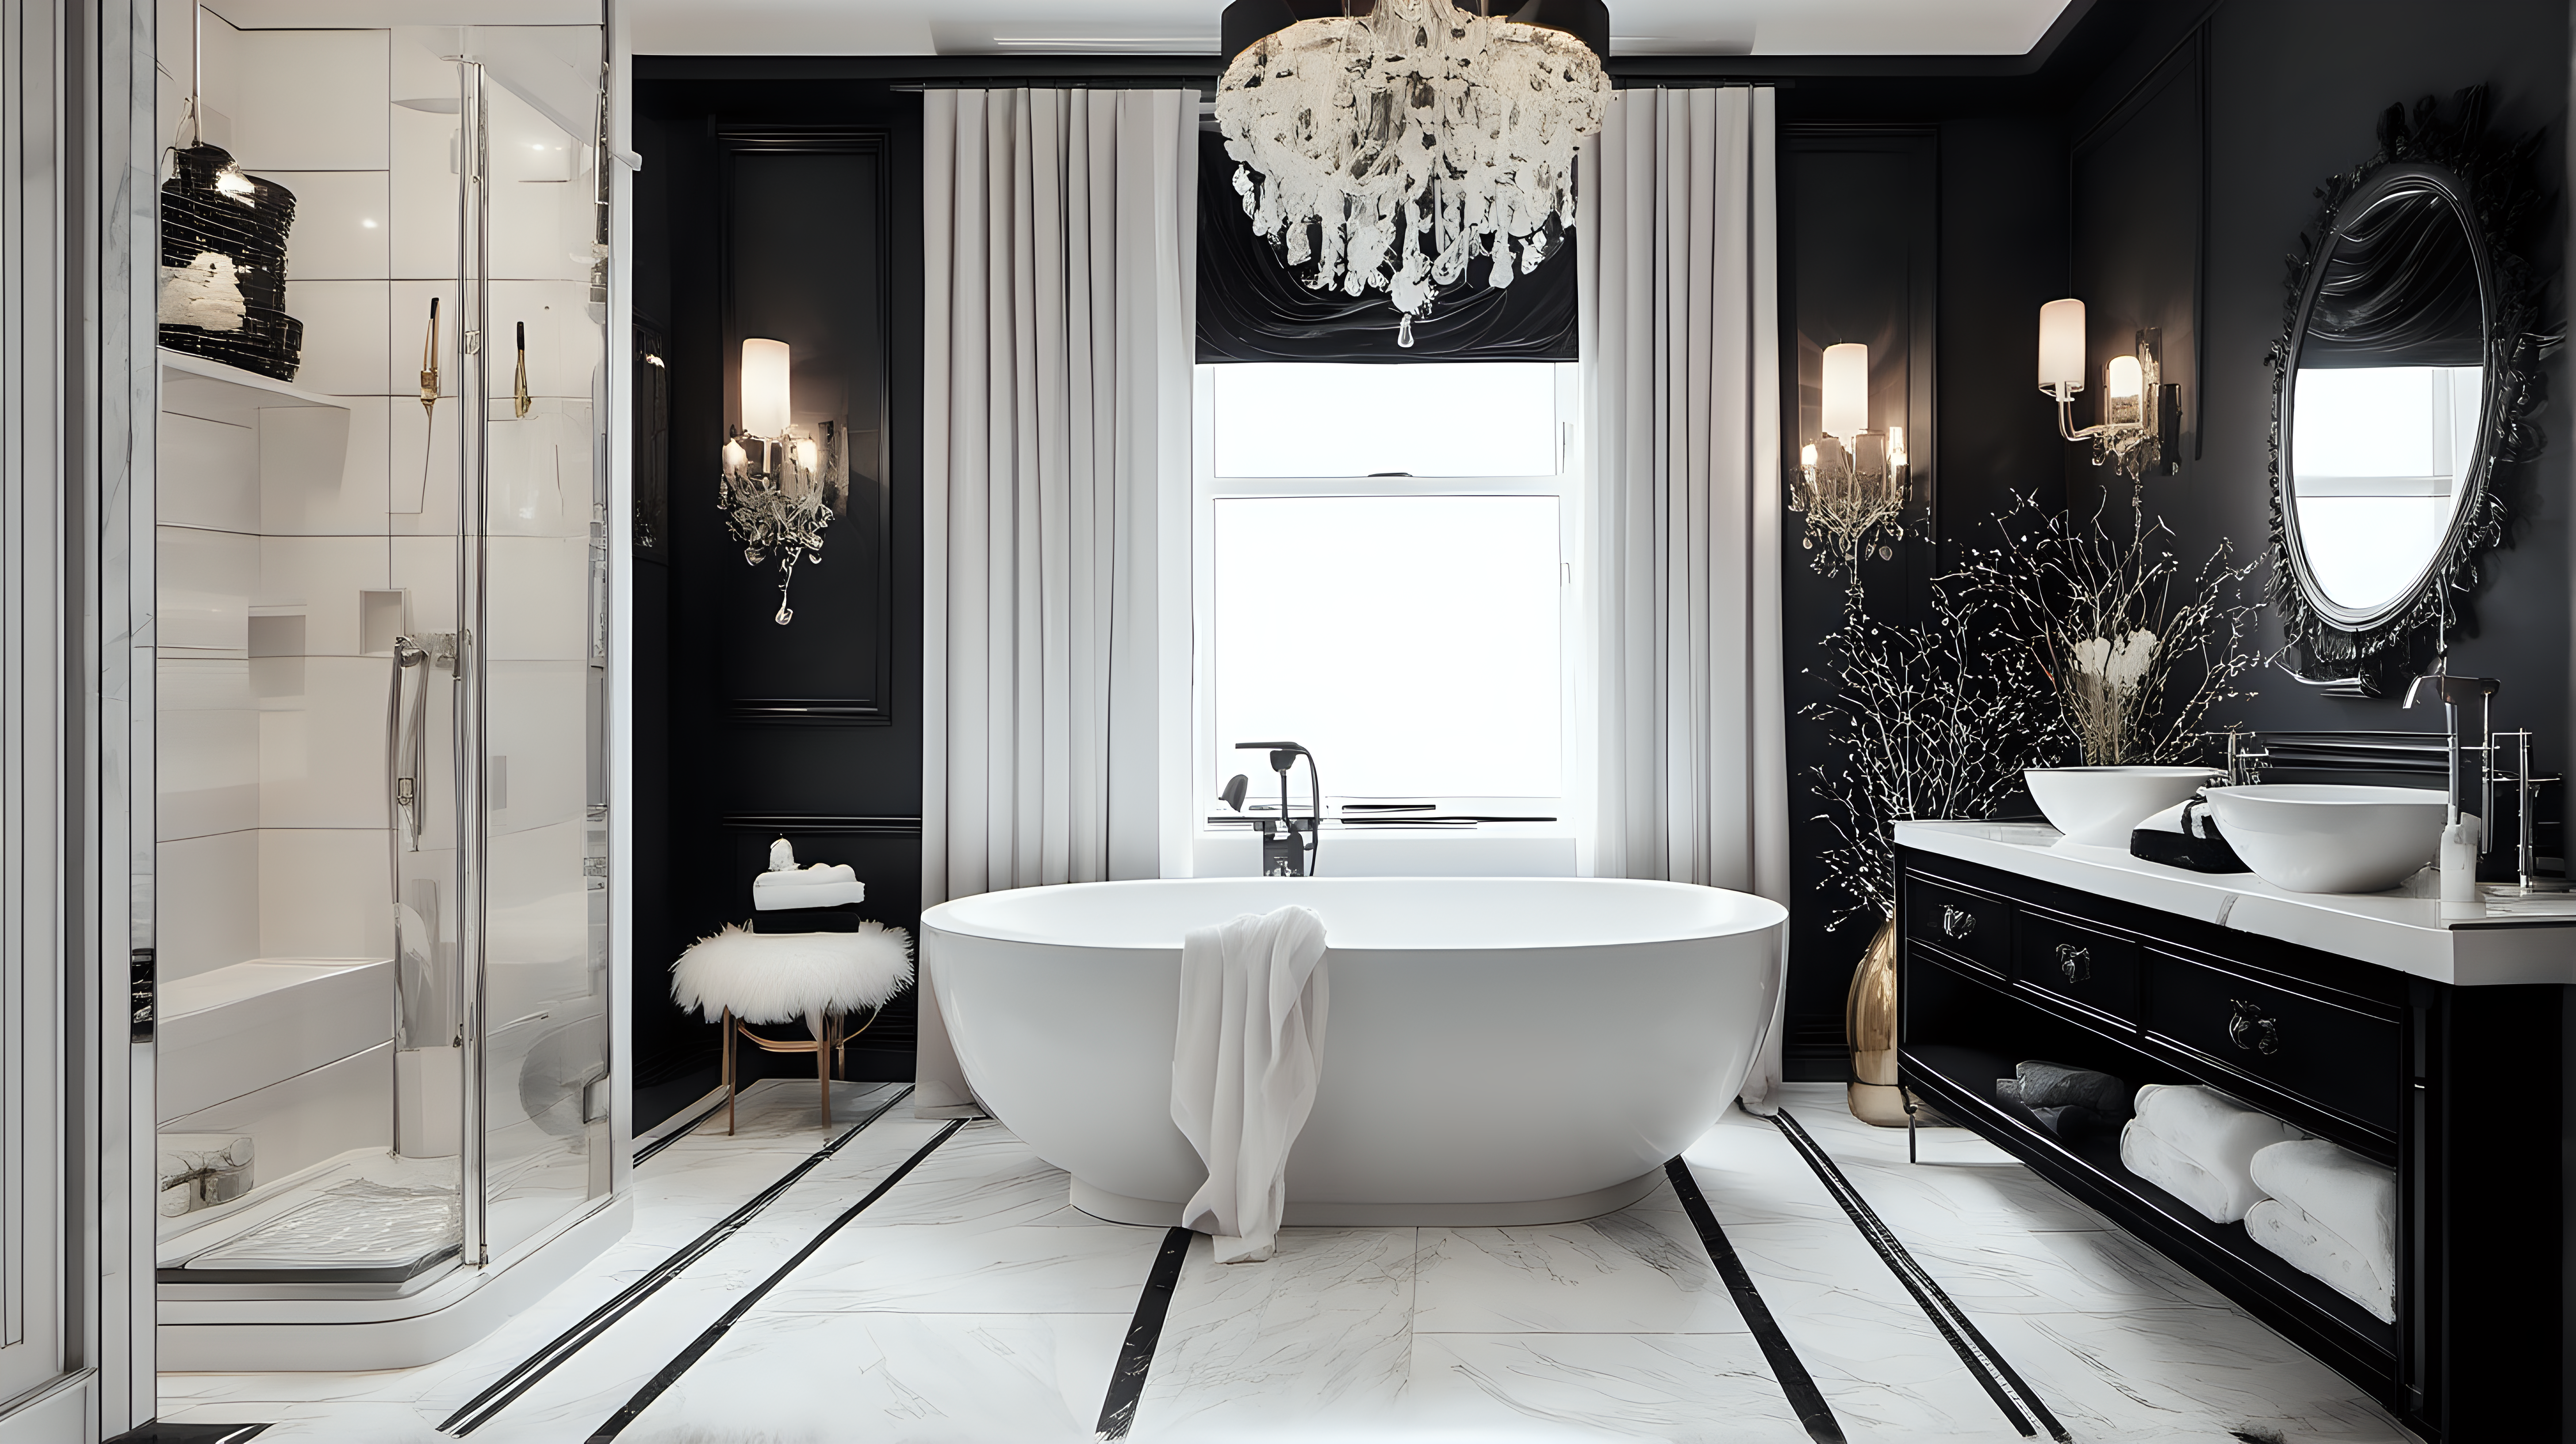 cozy Interior bathroom with black and white luxury